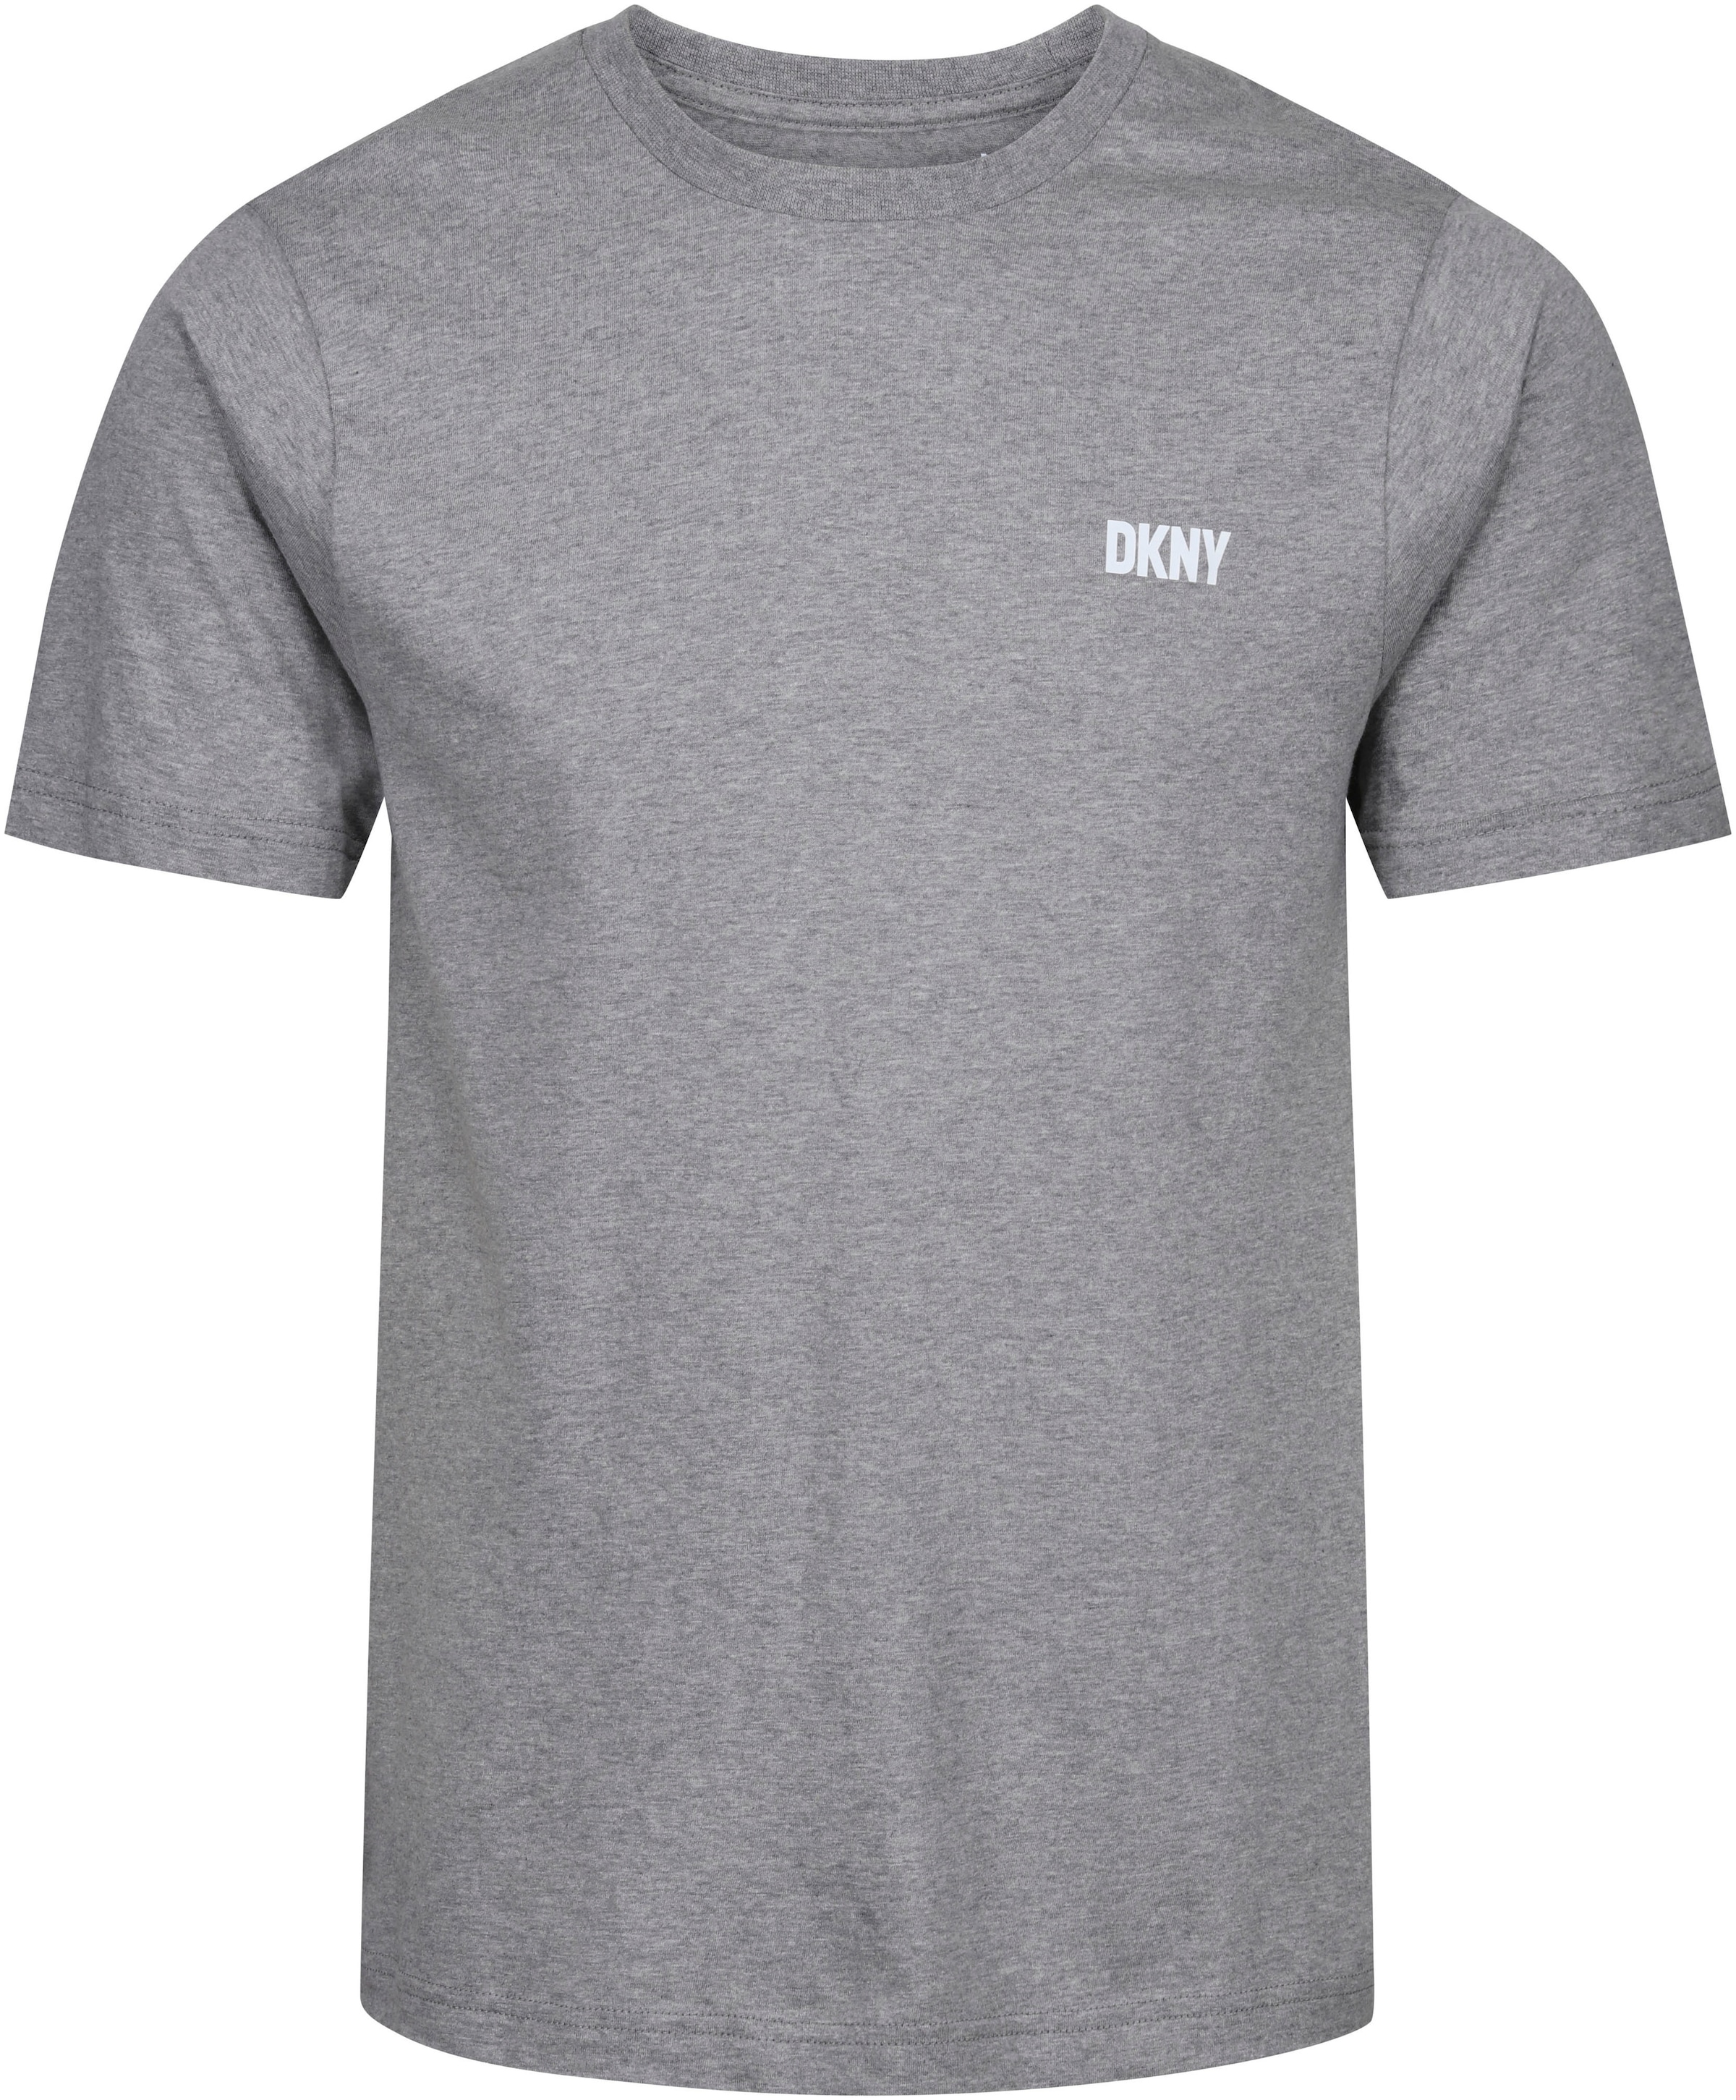 DKNY T-Shirt »GIANTS« online kaufen bei OTTO